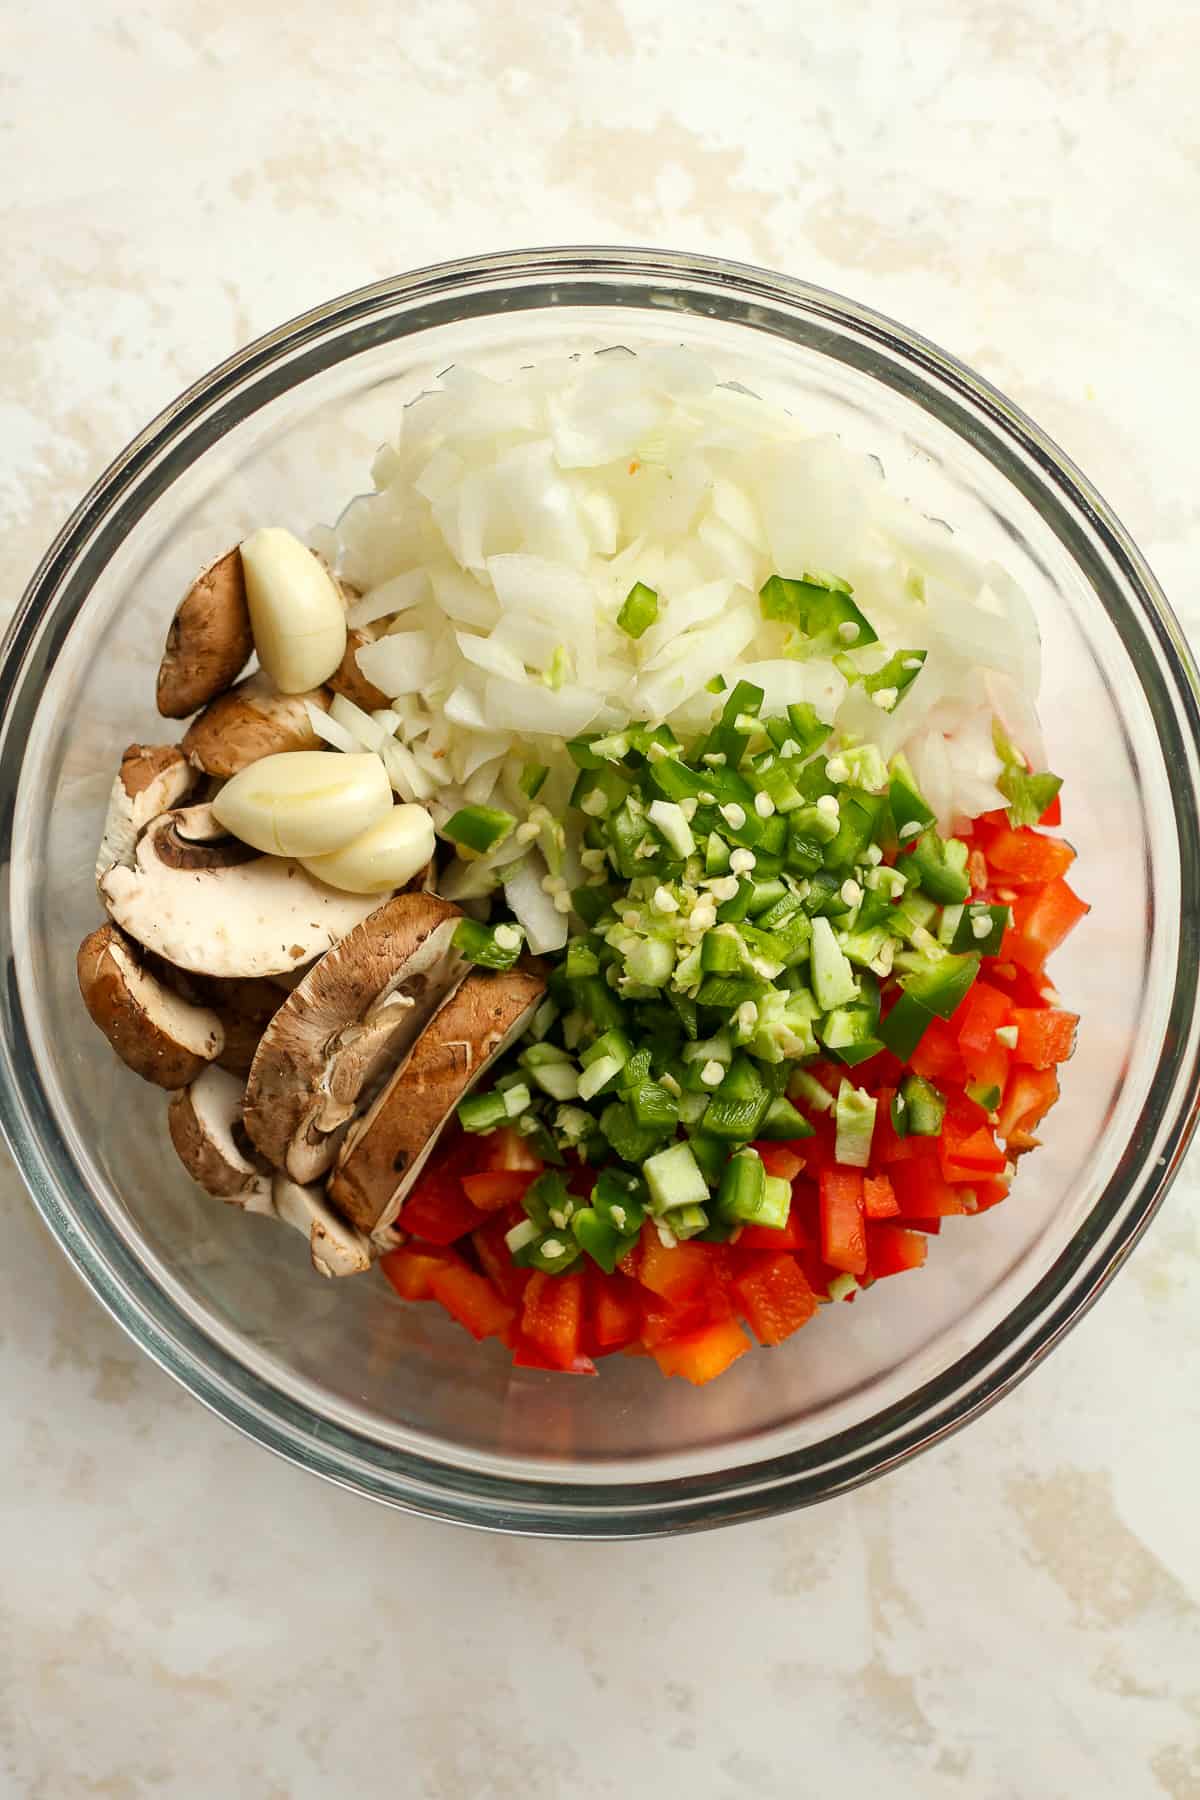 A bowl of the chopped veggies.